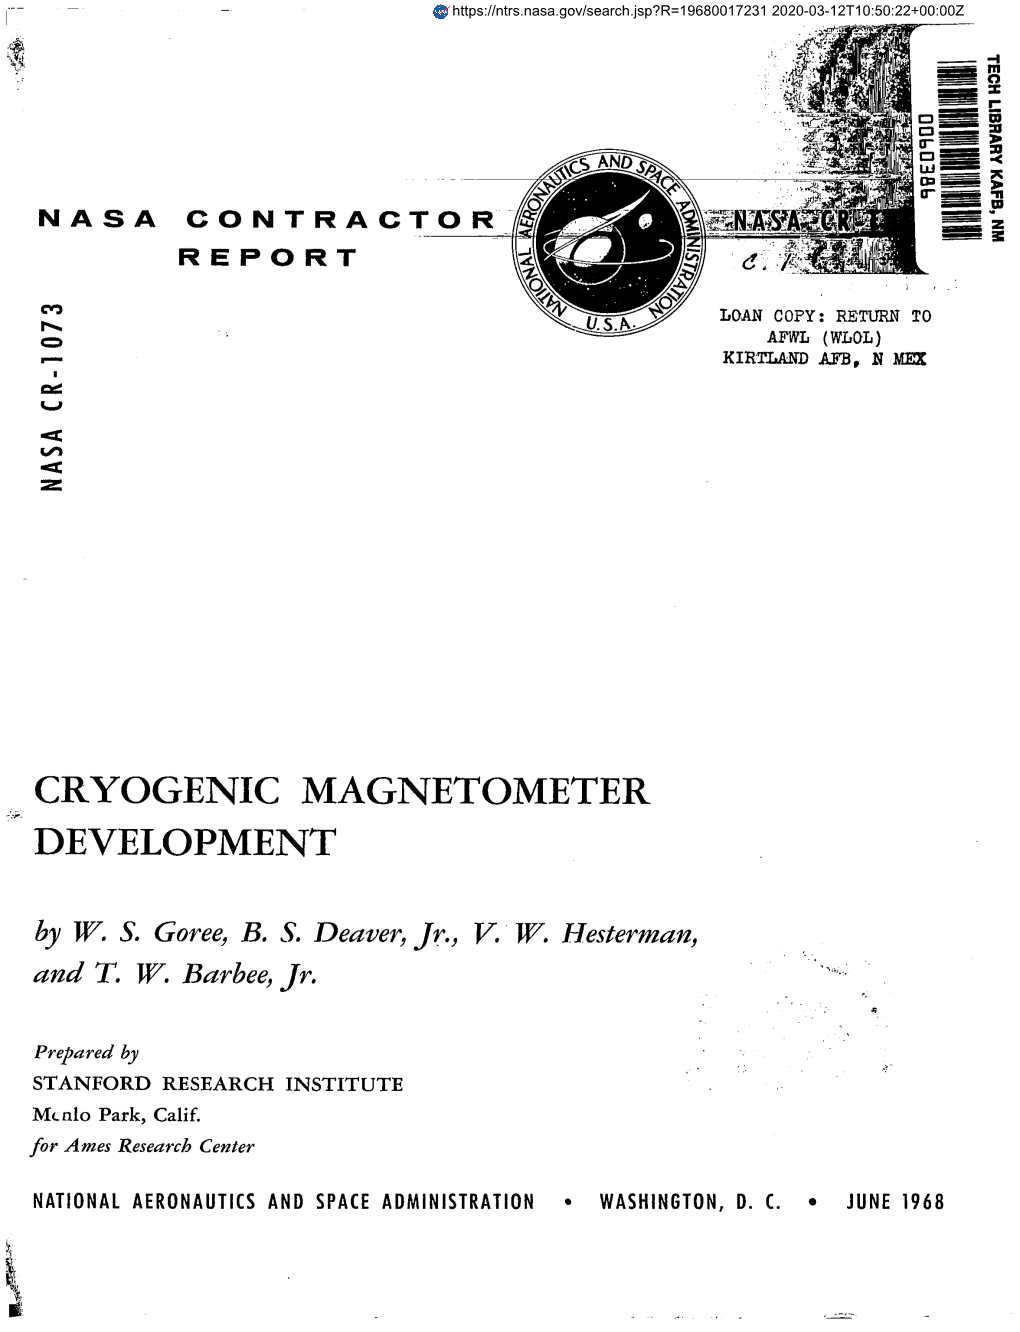 Cryogenic Magnetometer Development